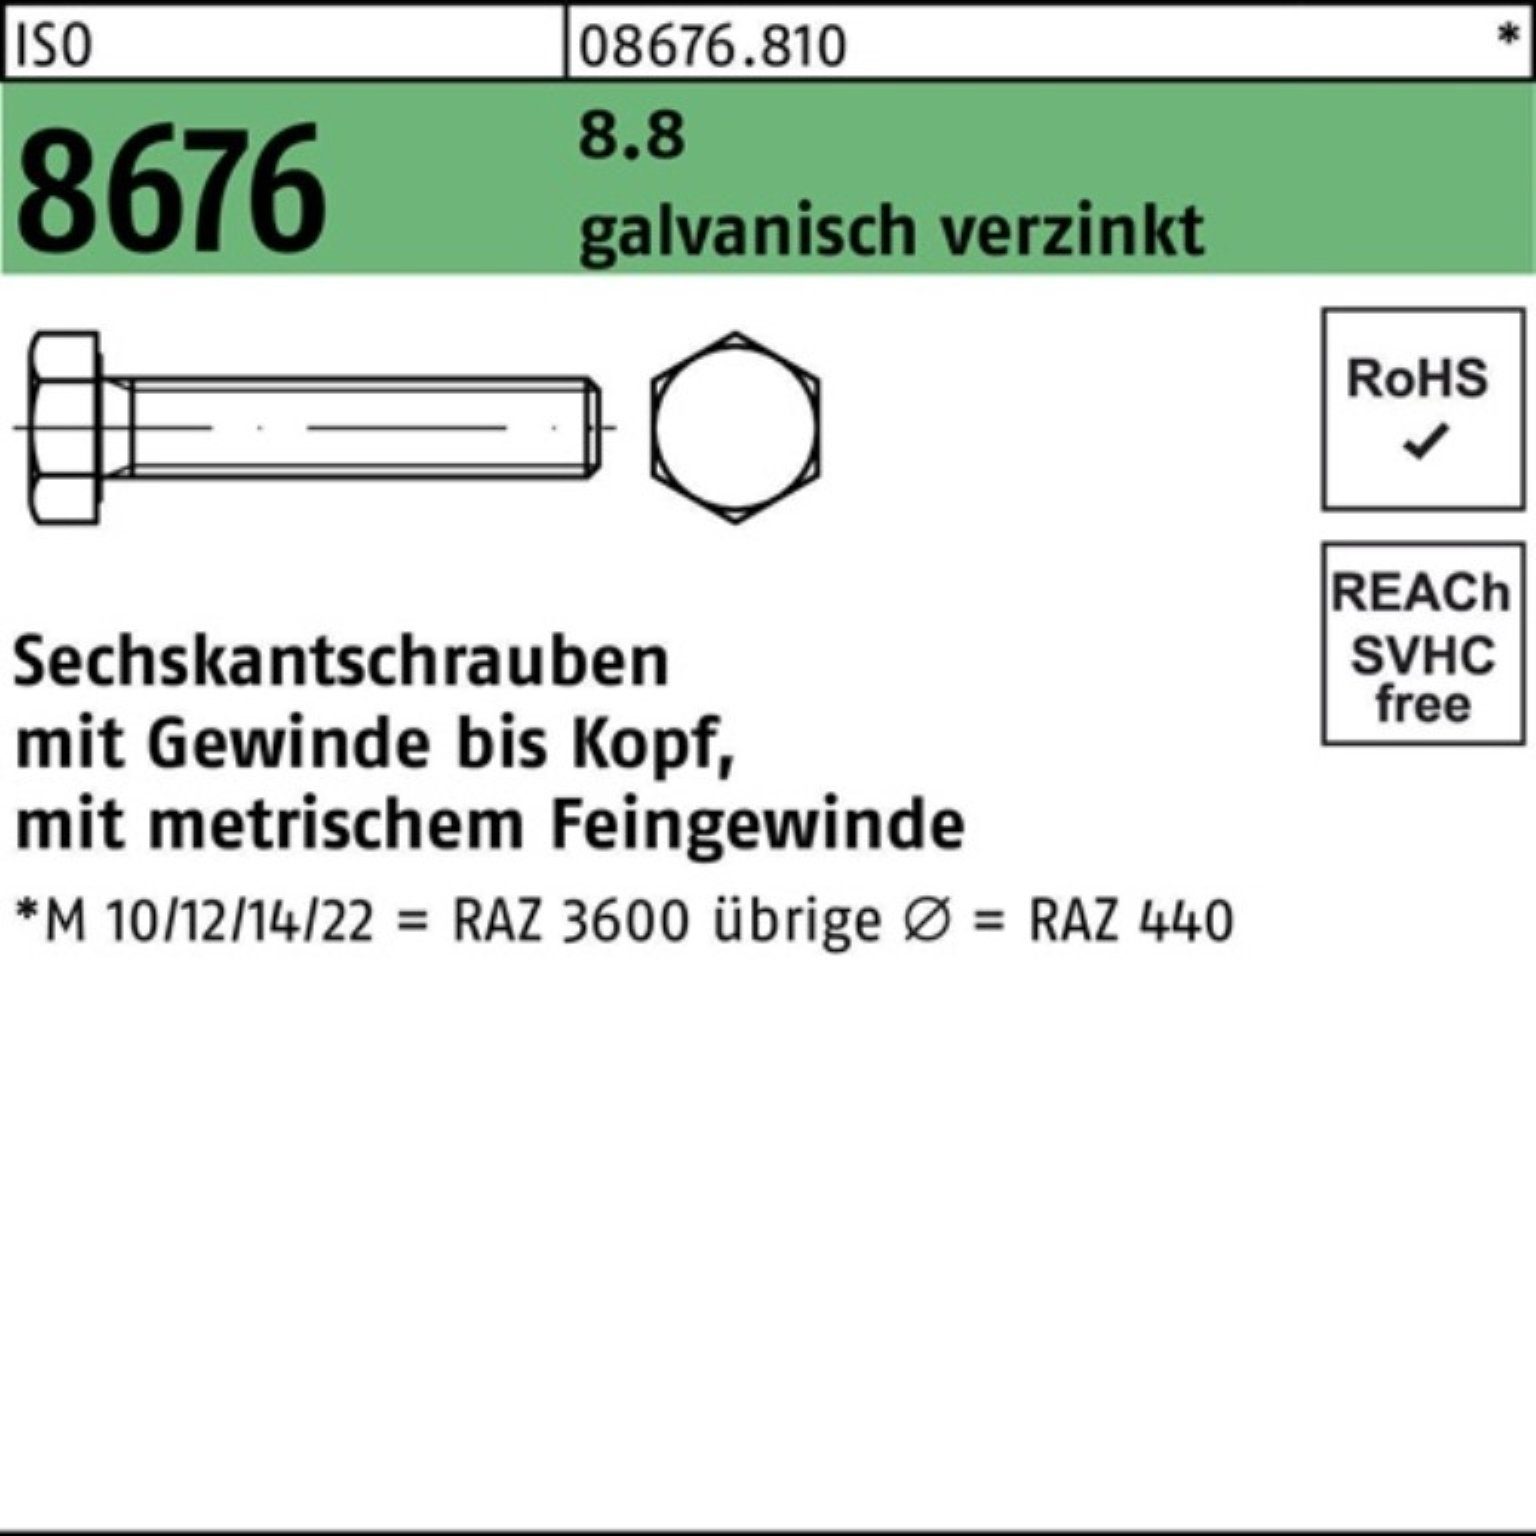 Reyher Sechskantschraube 100er 8676 M12x1,5x 8.8 50 ISO VG Pack Sechskantschraube galv.verz. 10